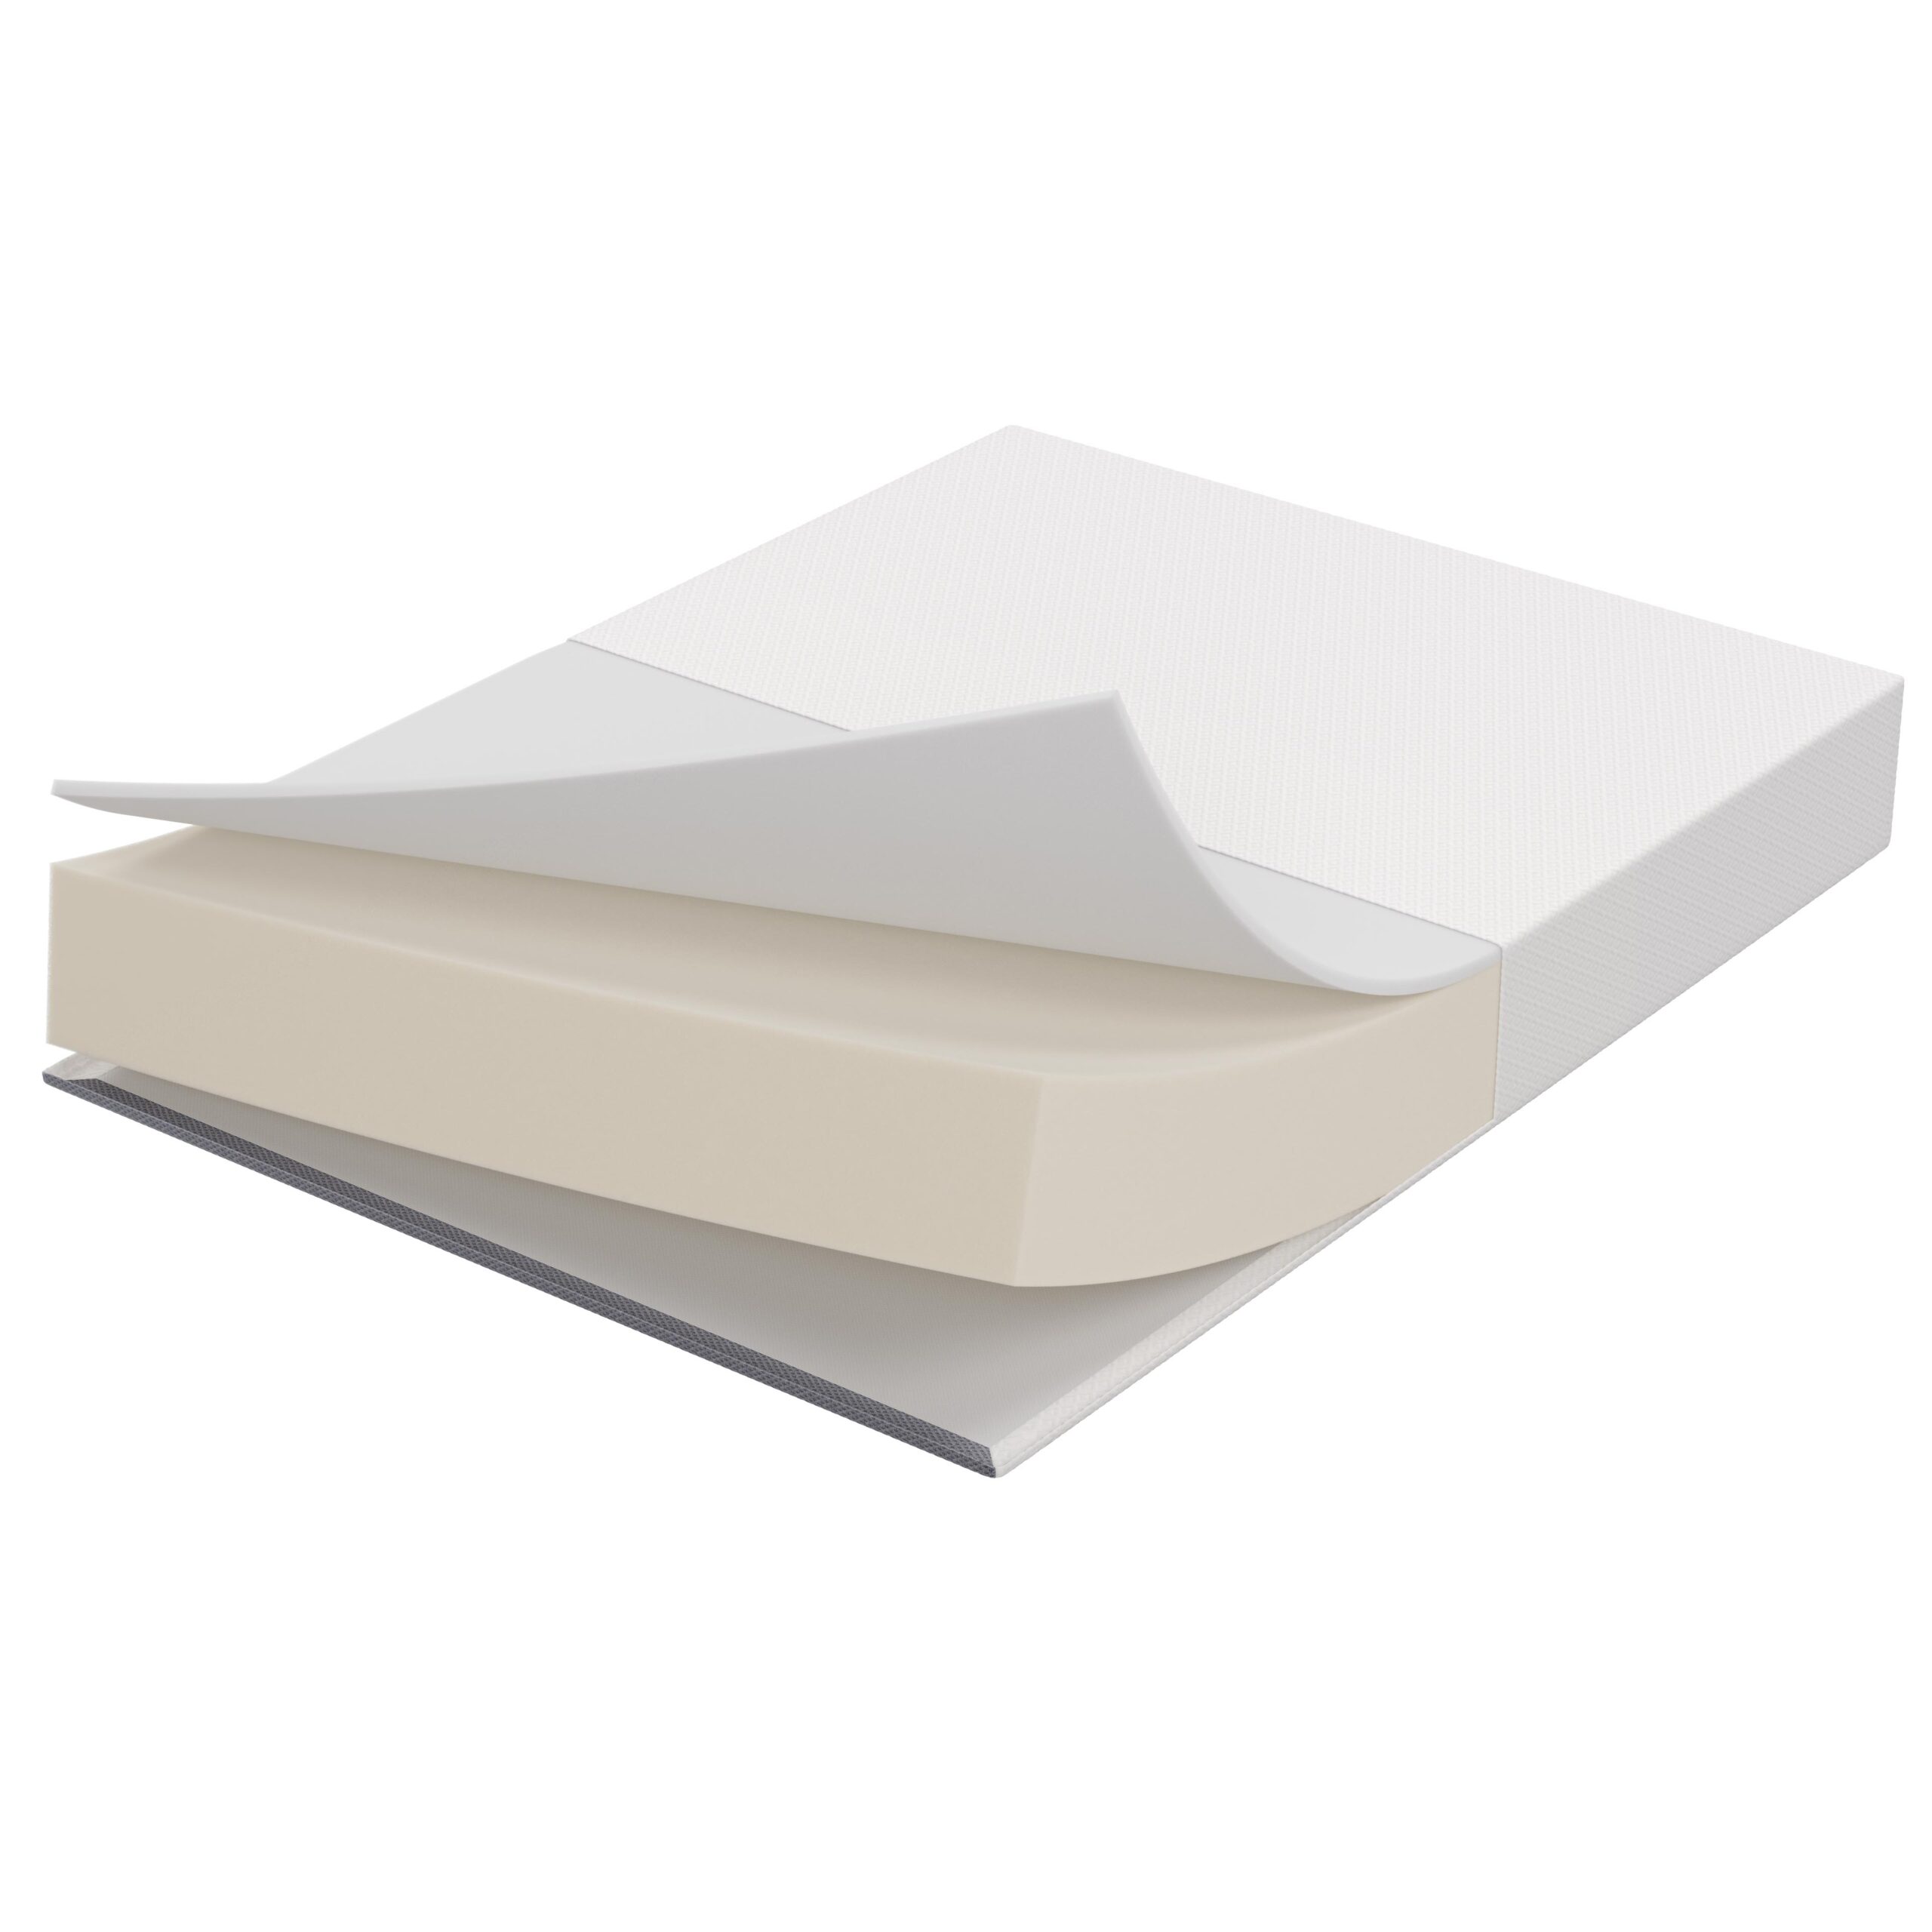 3d visualization cgi product mattress foam inside structure peeling view 3d corner